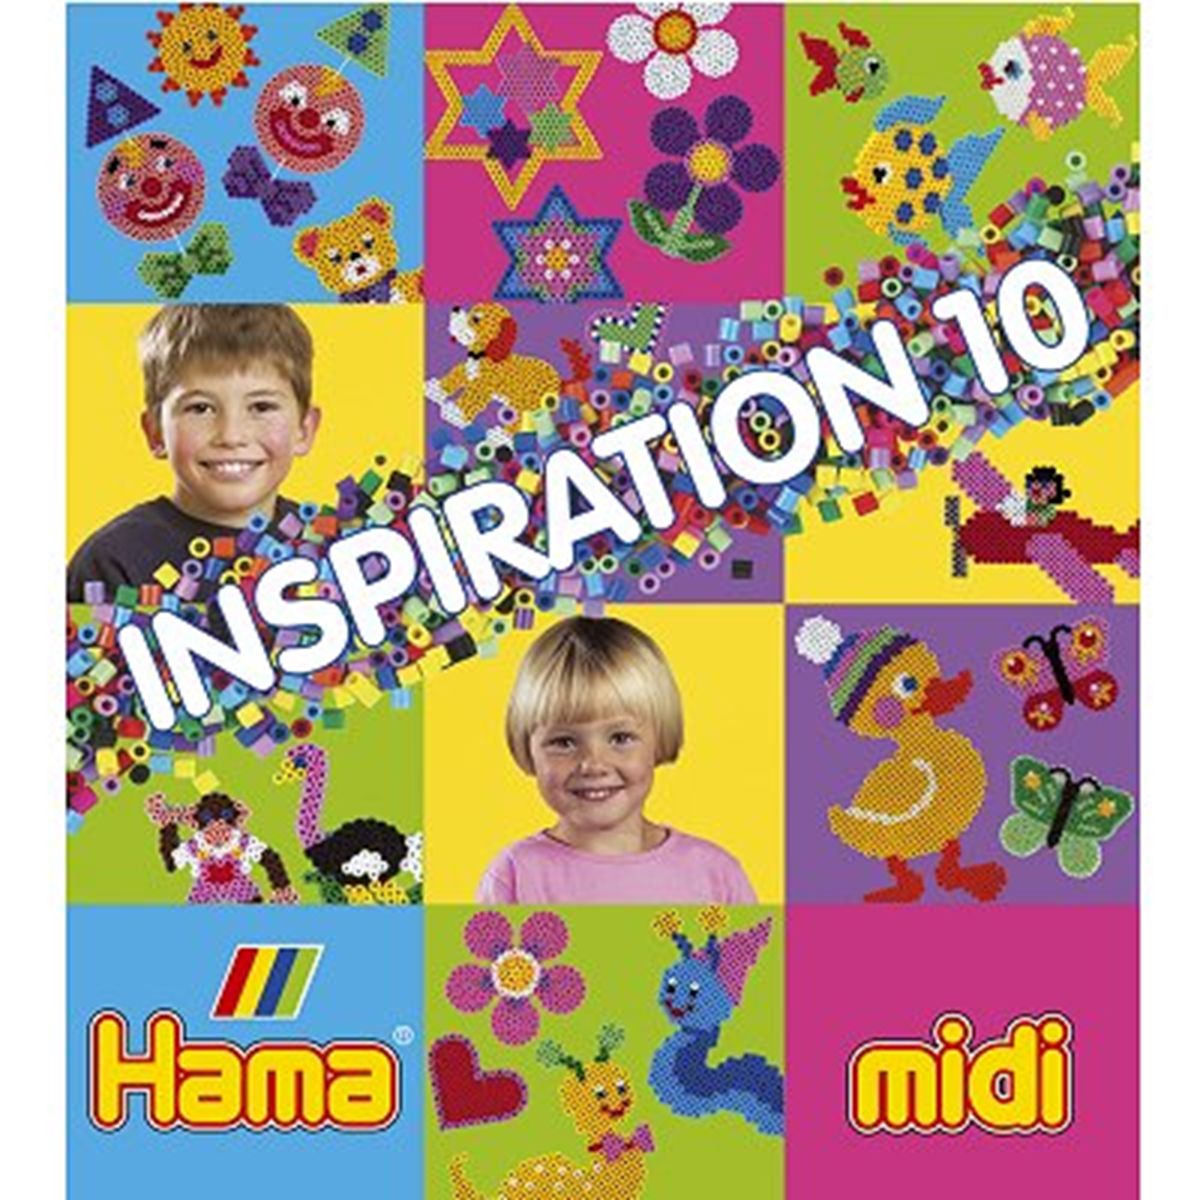 399-12 Perles à Repasser Midi 68 Pages Livre Inspiration n°12 Hama Loisirs Créatifs 